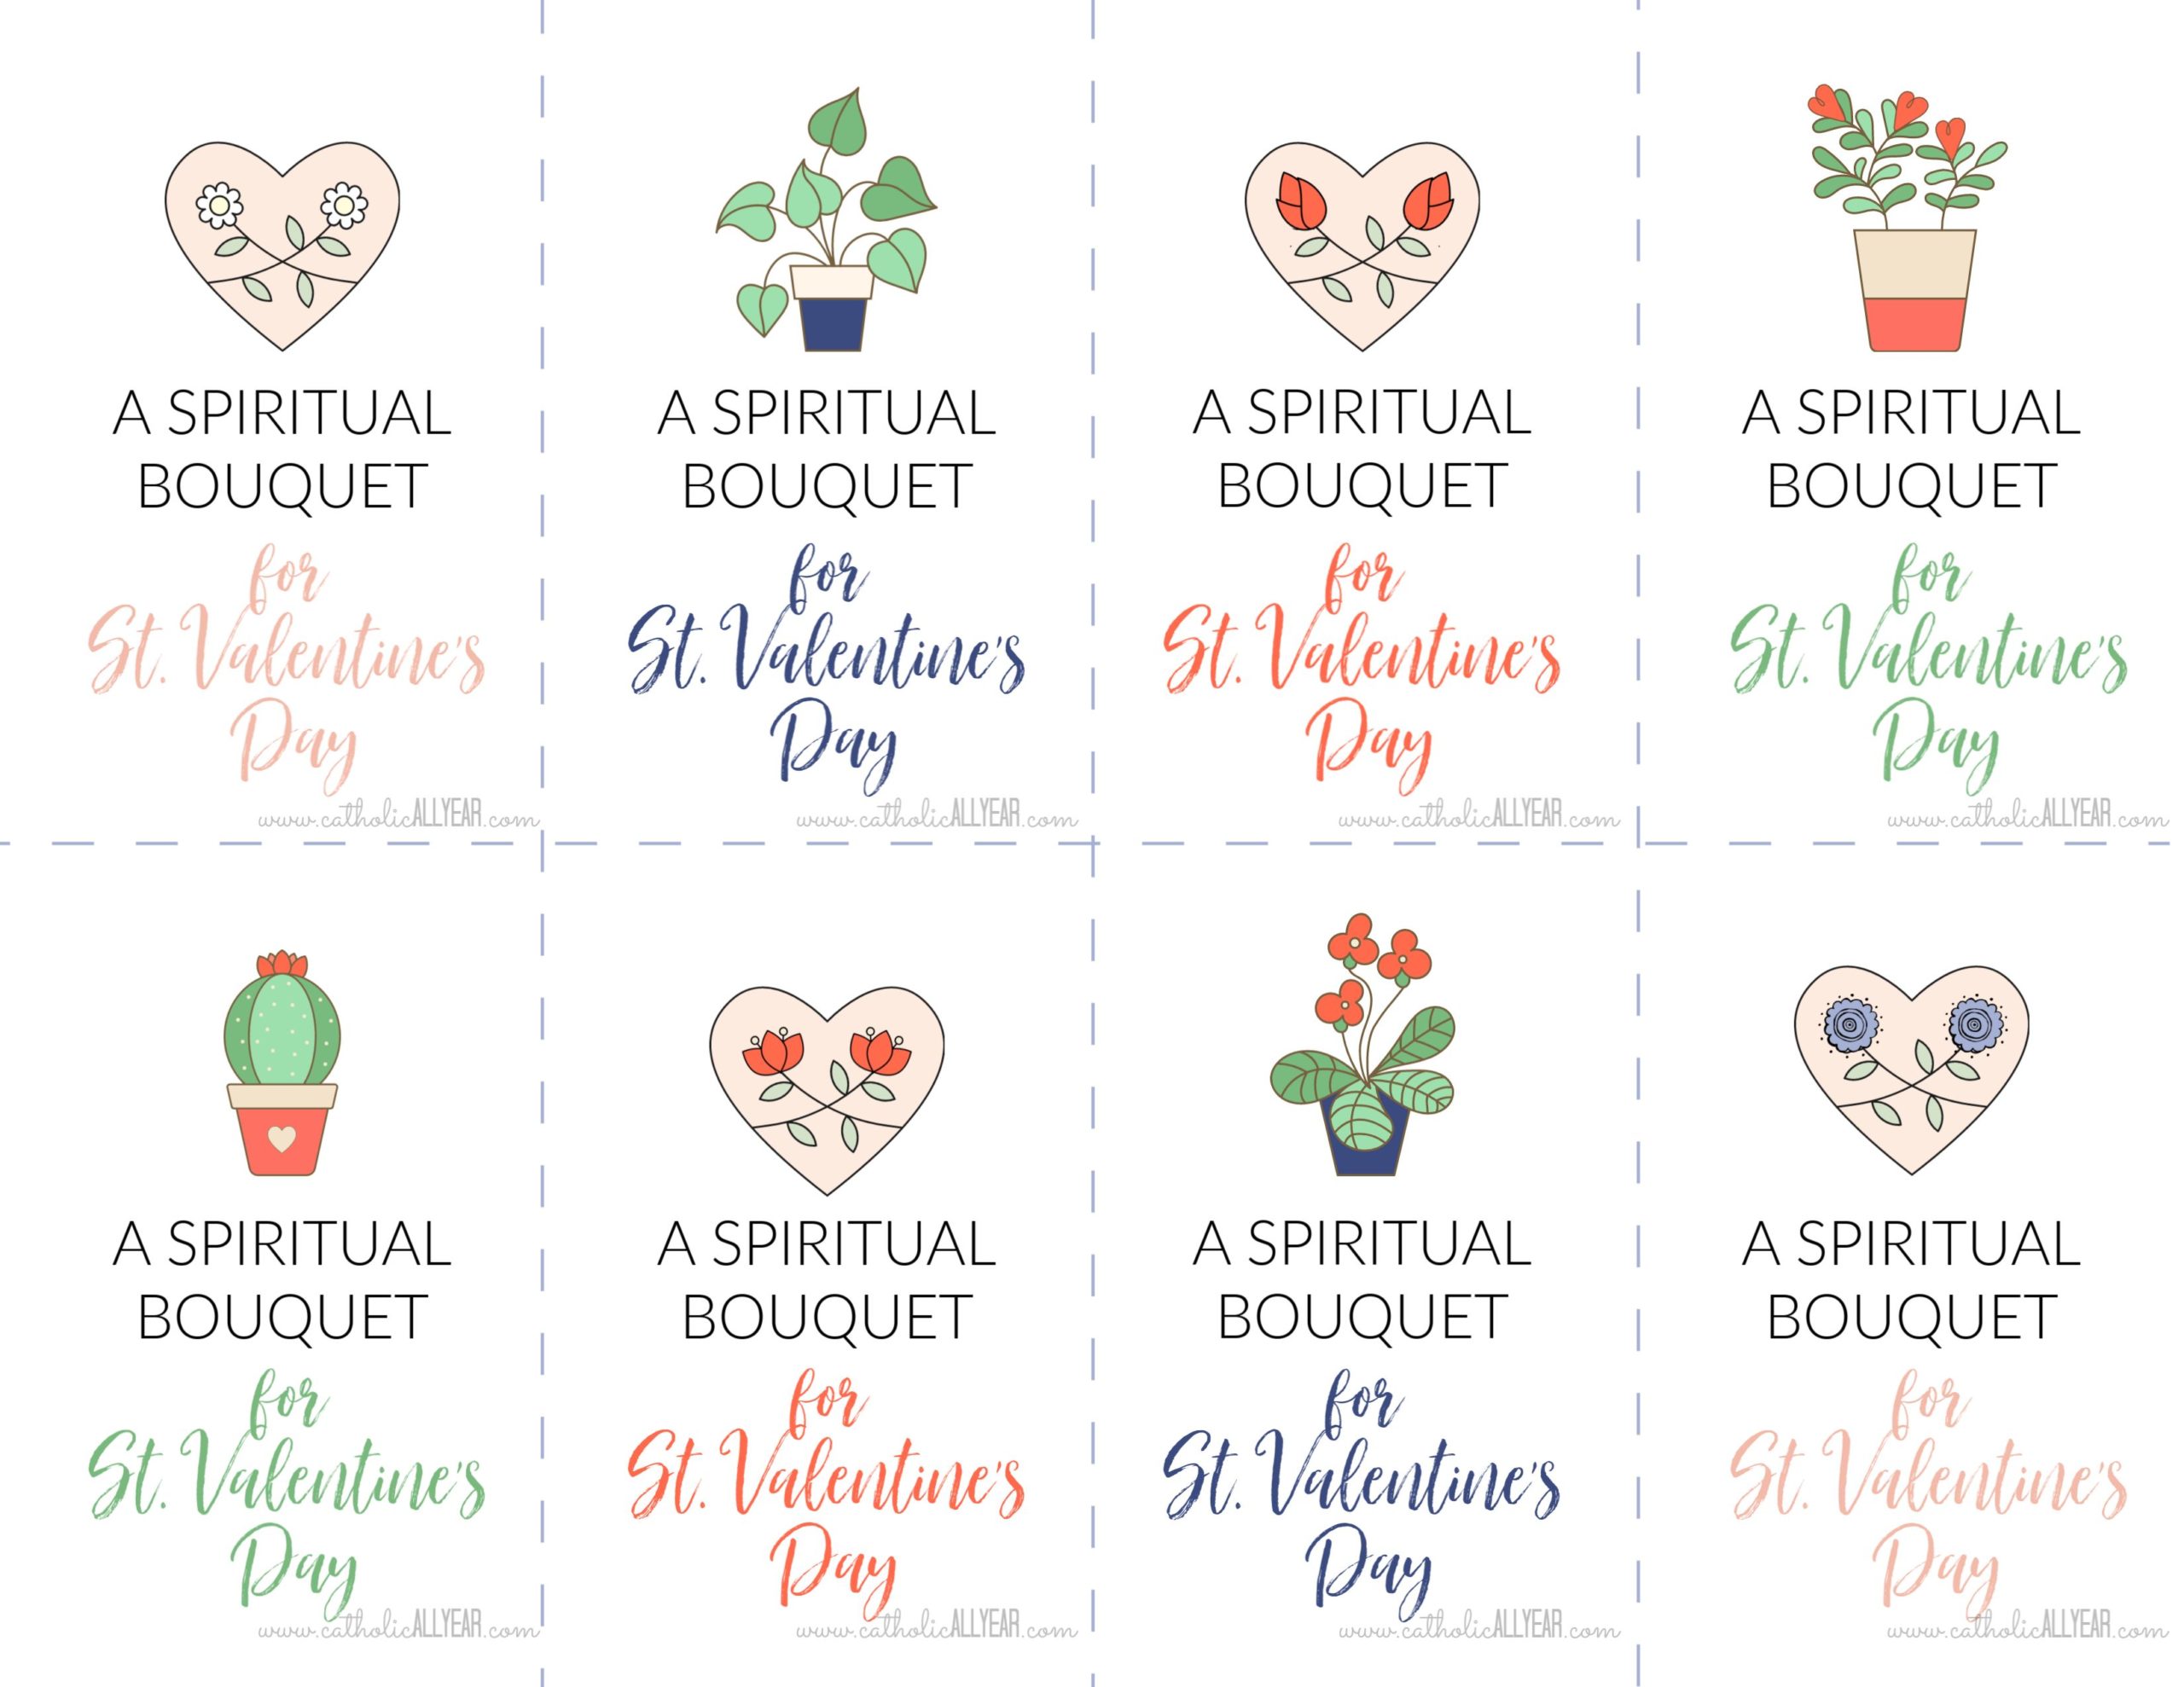 catholic-valentine-cards-digital-download-spiritual-bouquet-8-5x11